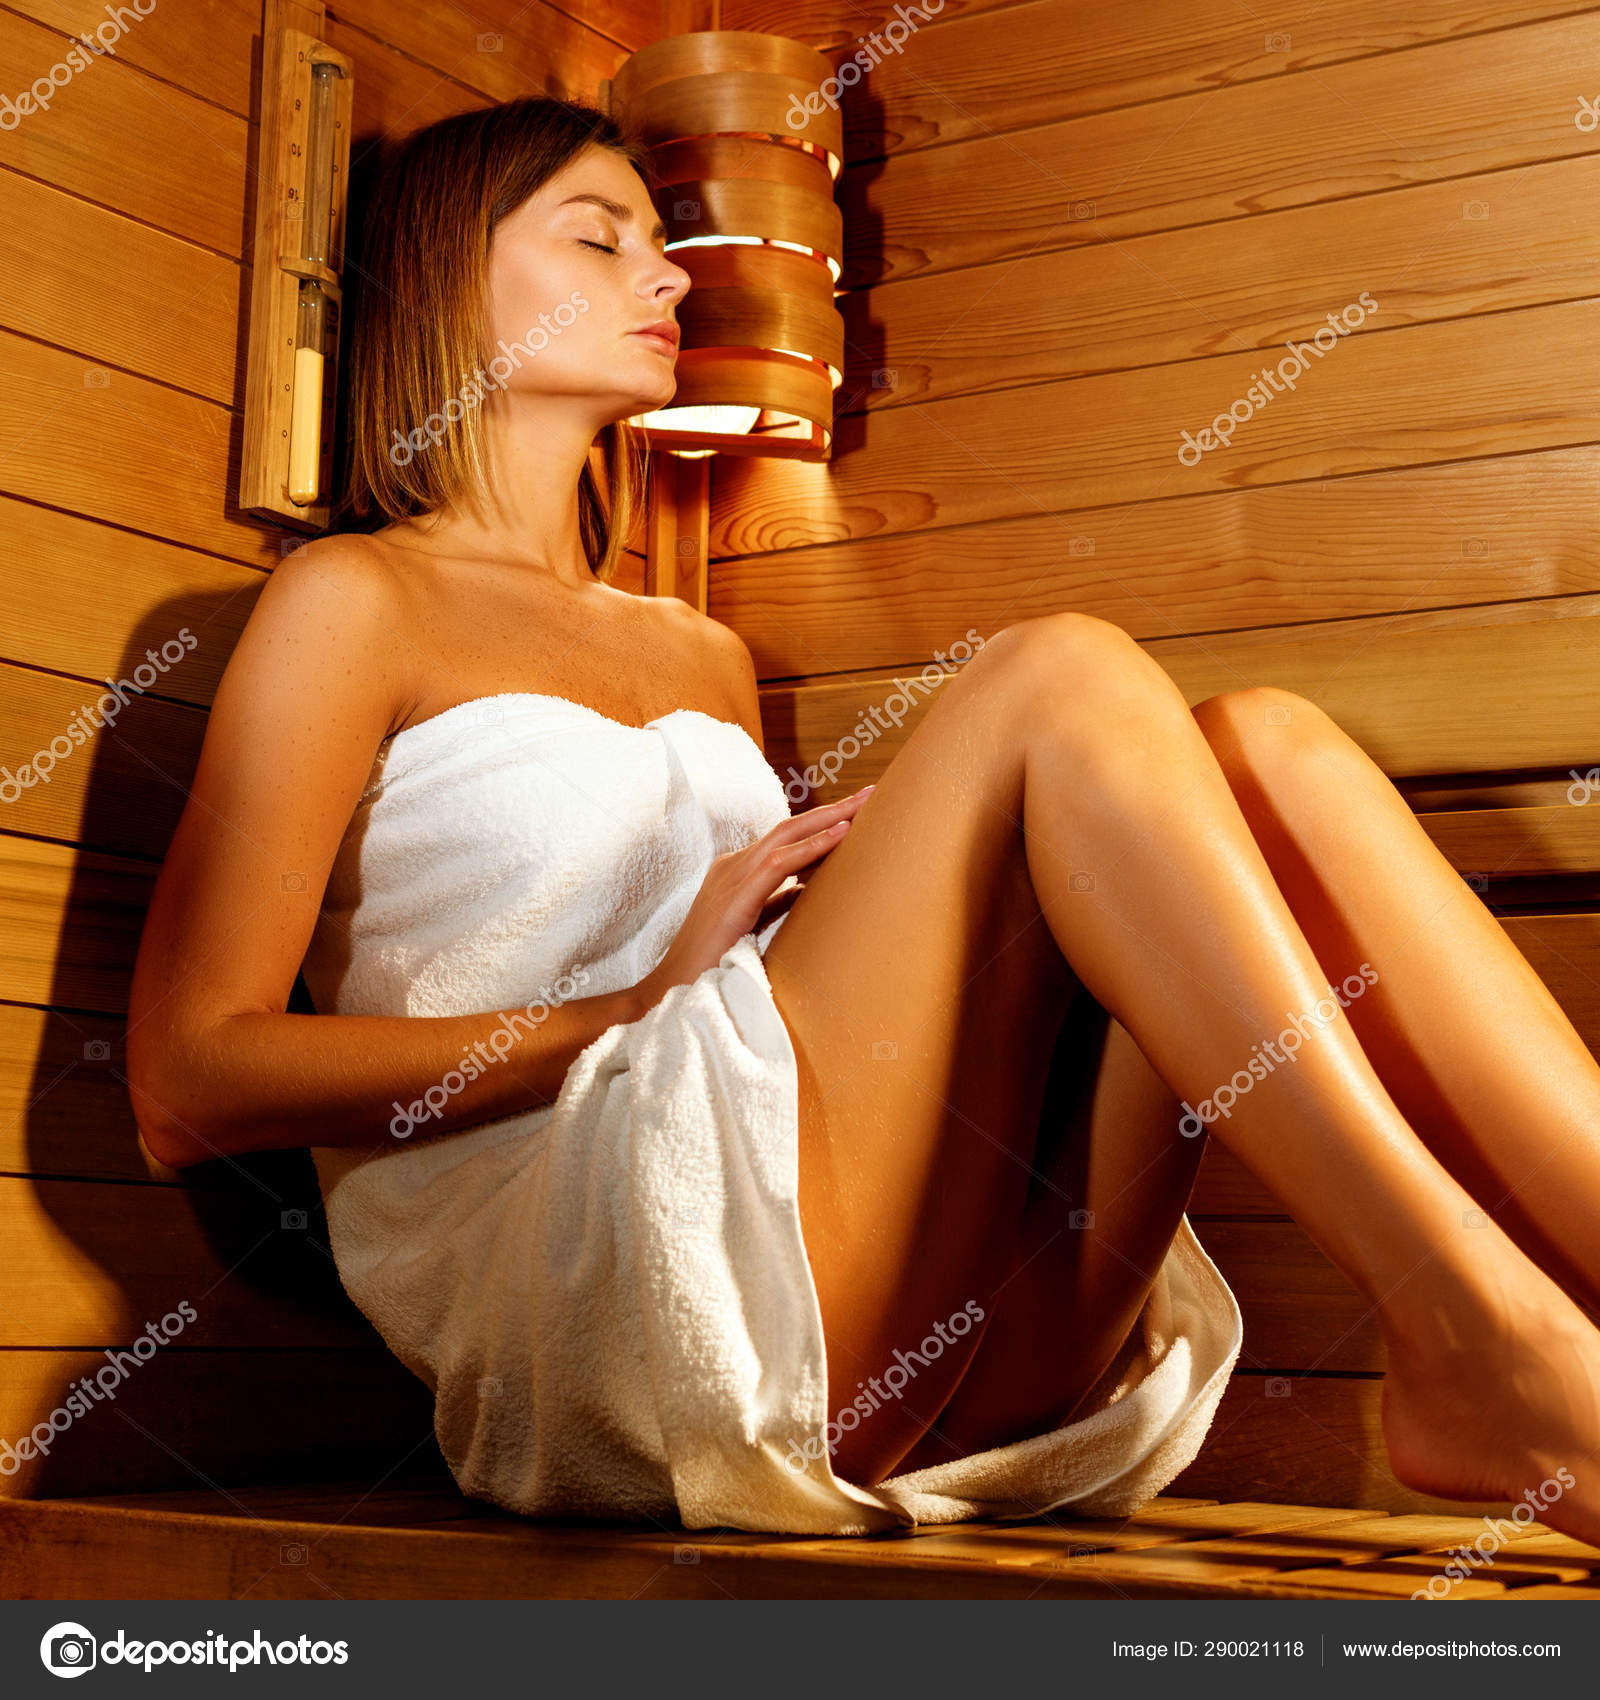 A Beautiful Woman Wearing A White Towel Takes A Sauna The Sauna Is